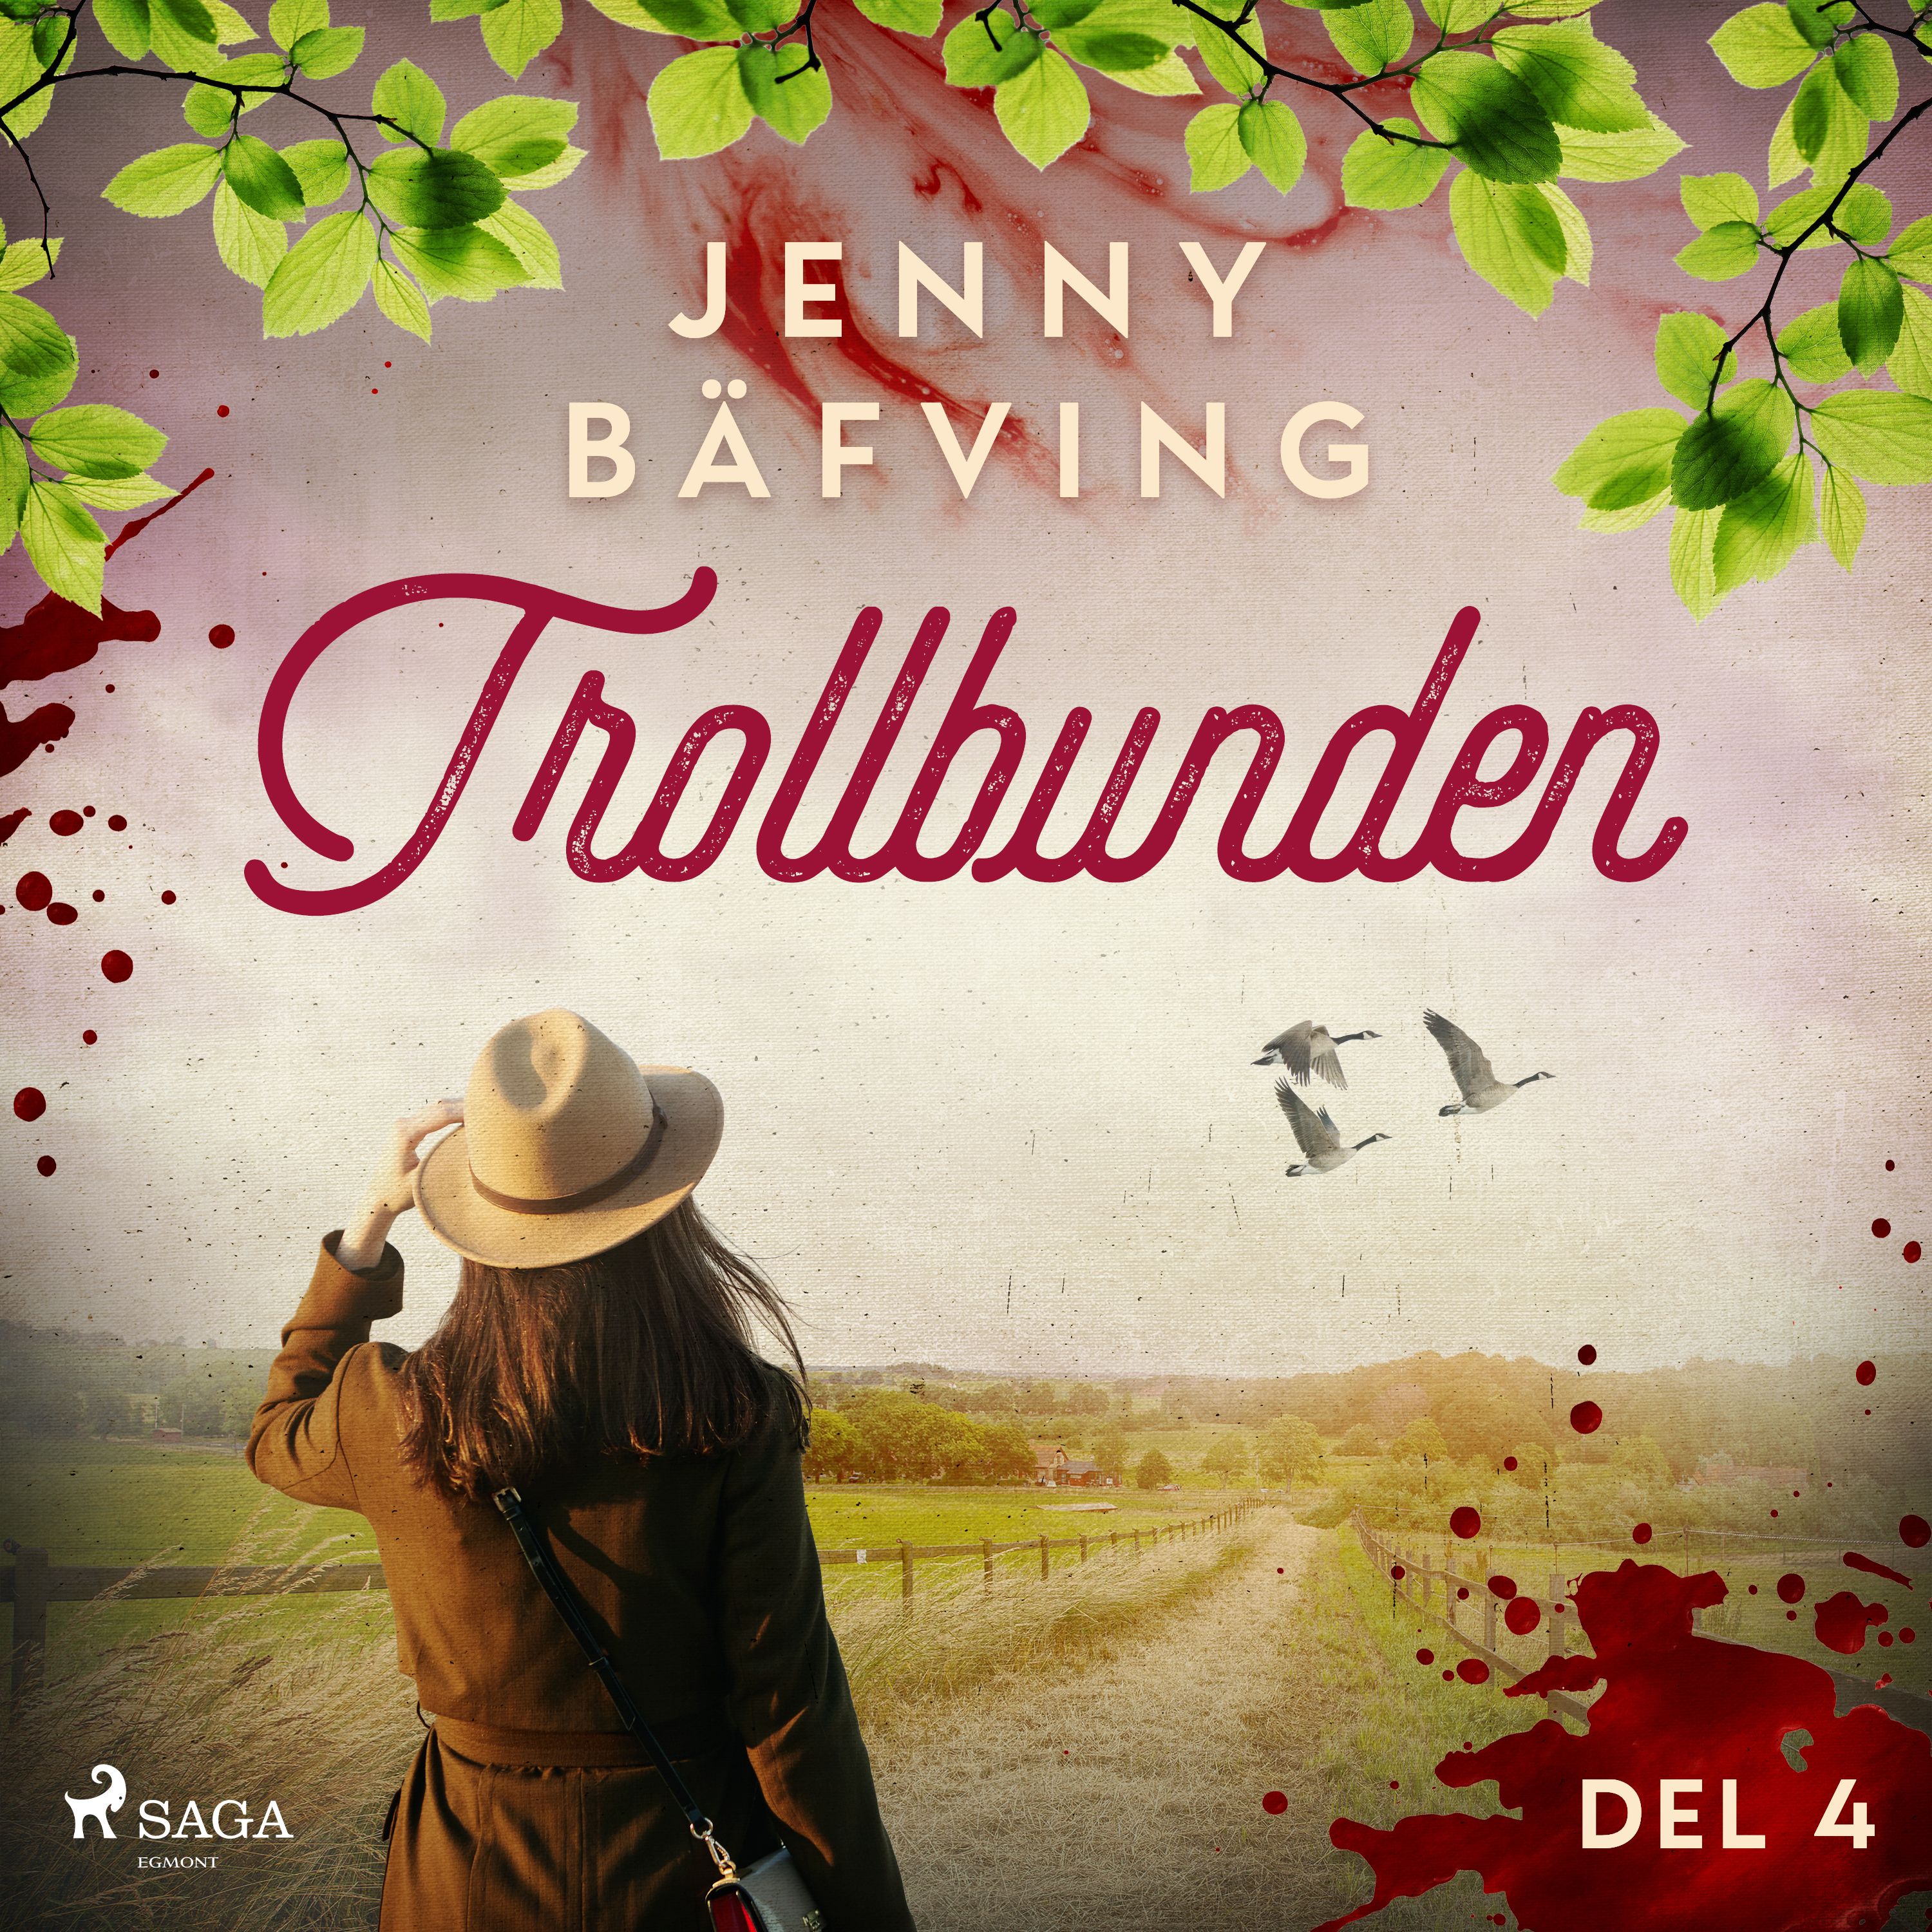 Trollbunden del 4, audiobook by Jenny Bäfving